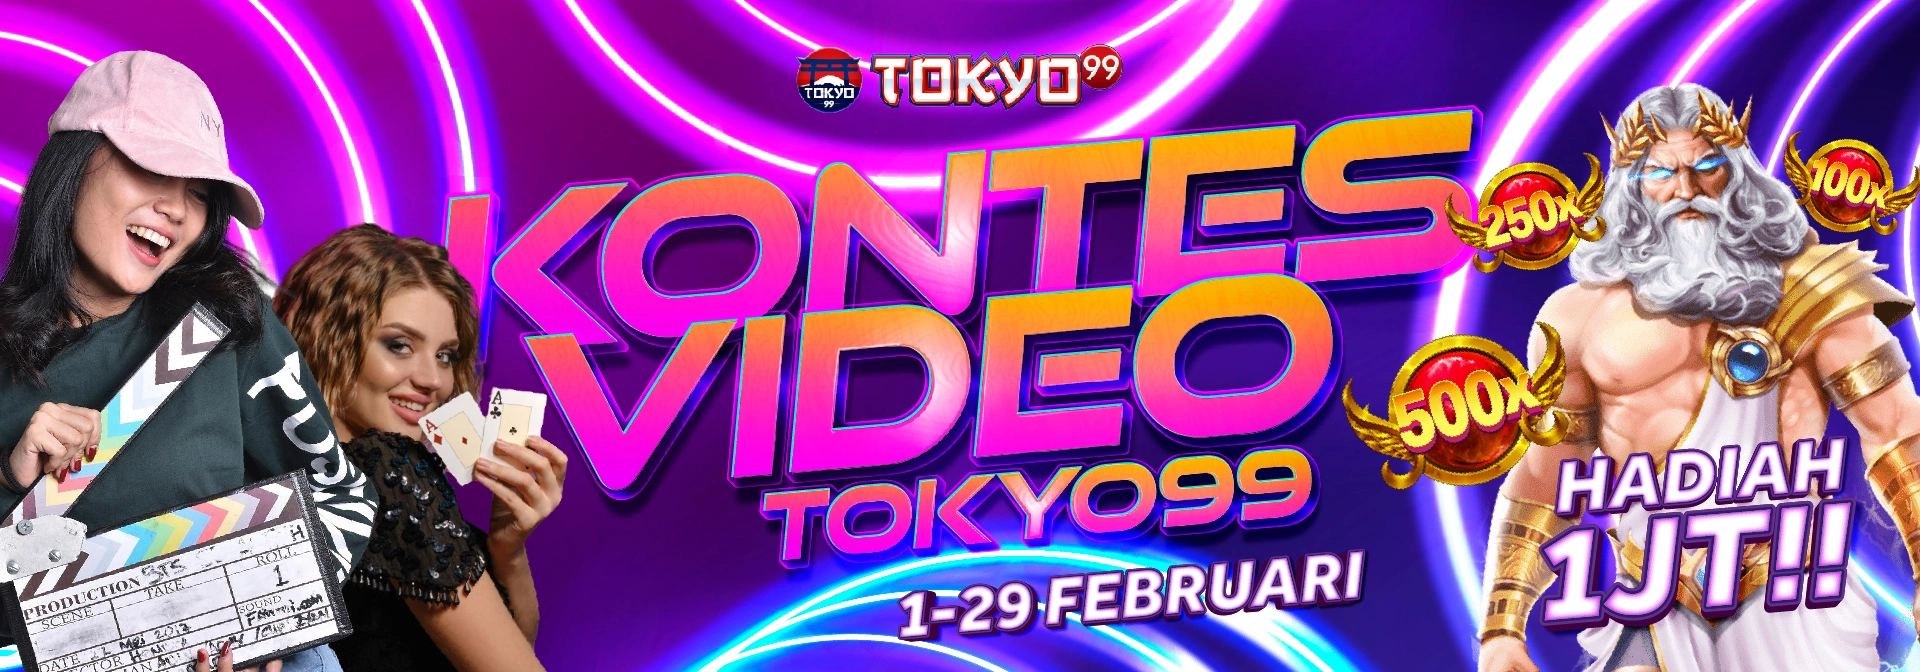 KONTES VIDEO TOKYO99